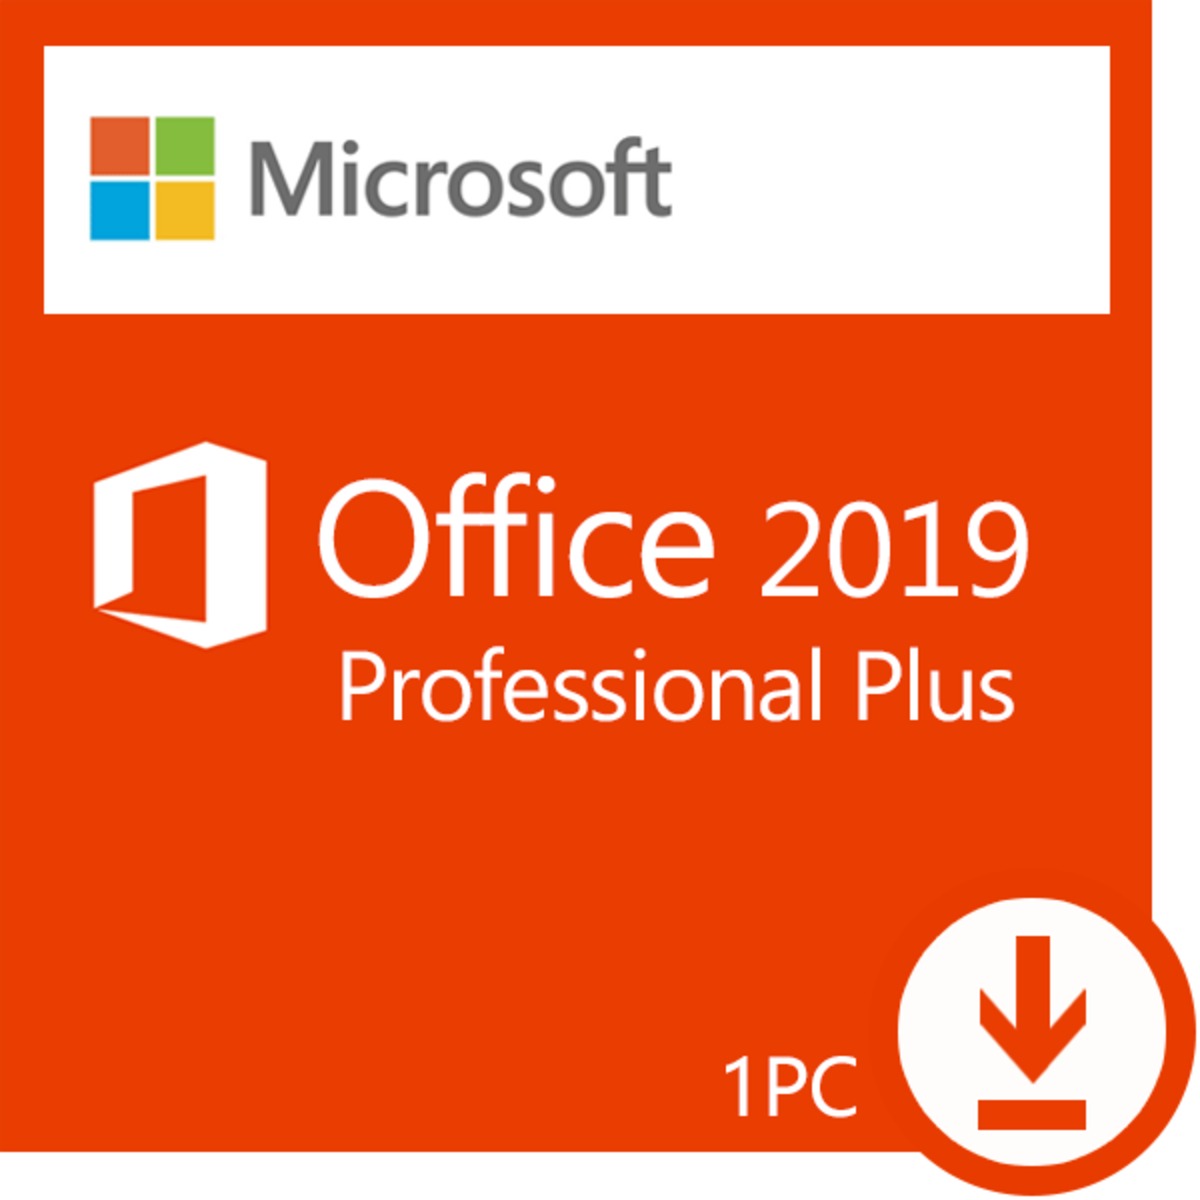 Microsoft Office Professional 2016